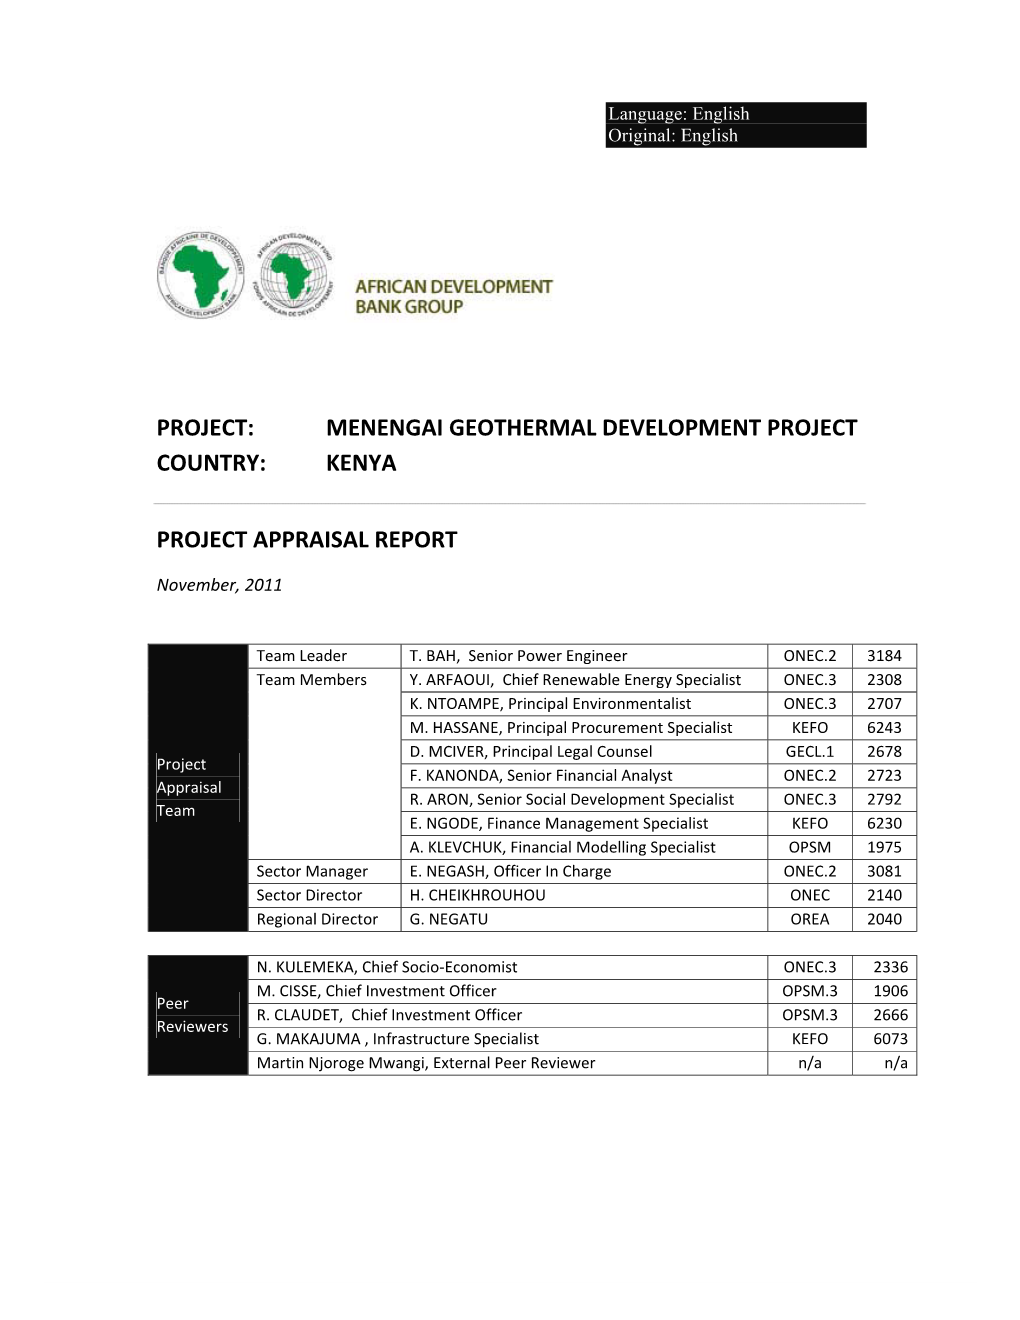 Project: Menengai Geothermal Development Project Country: Kenya